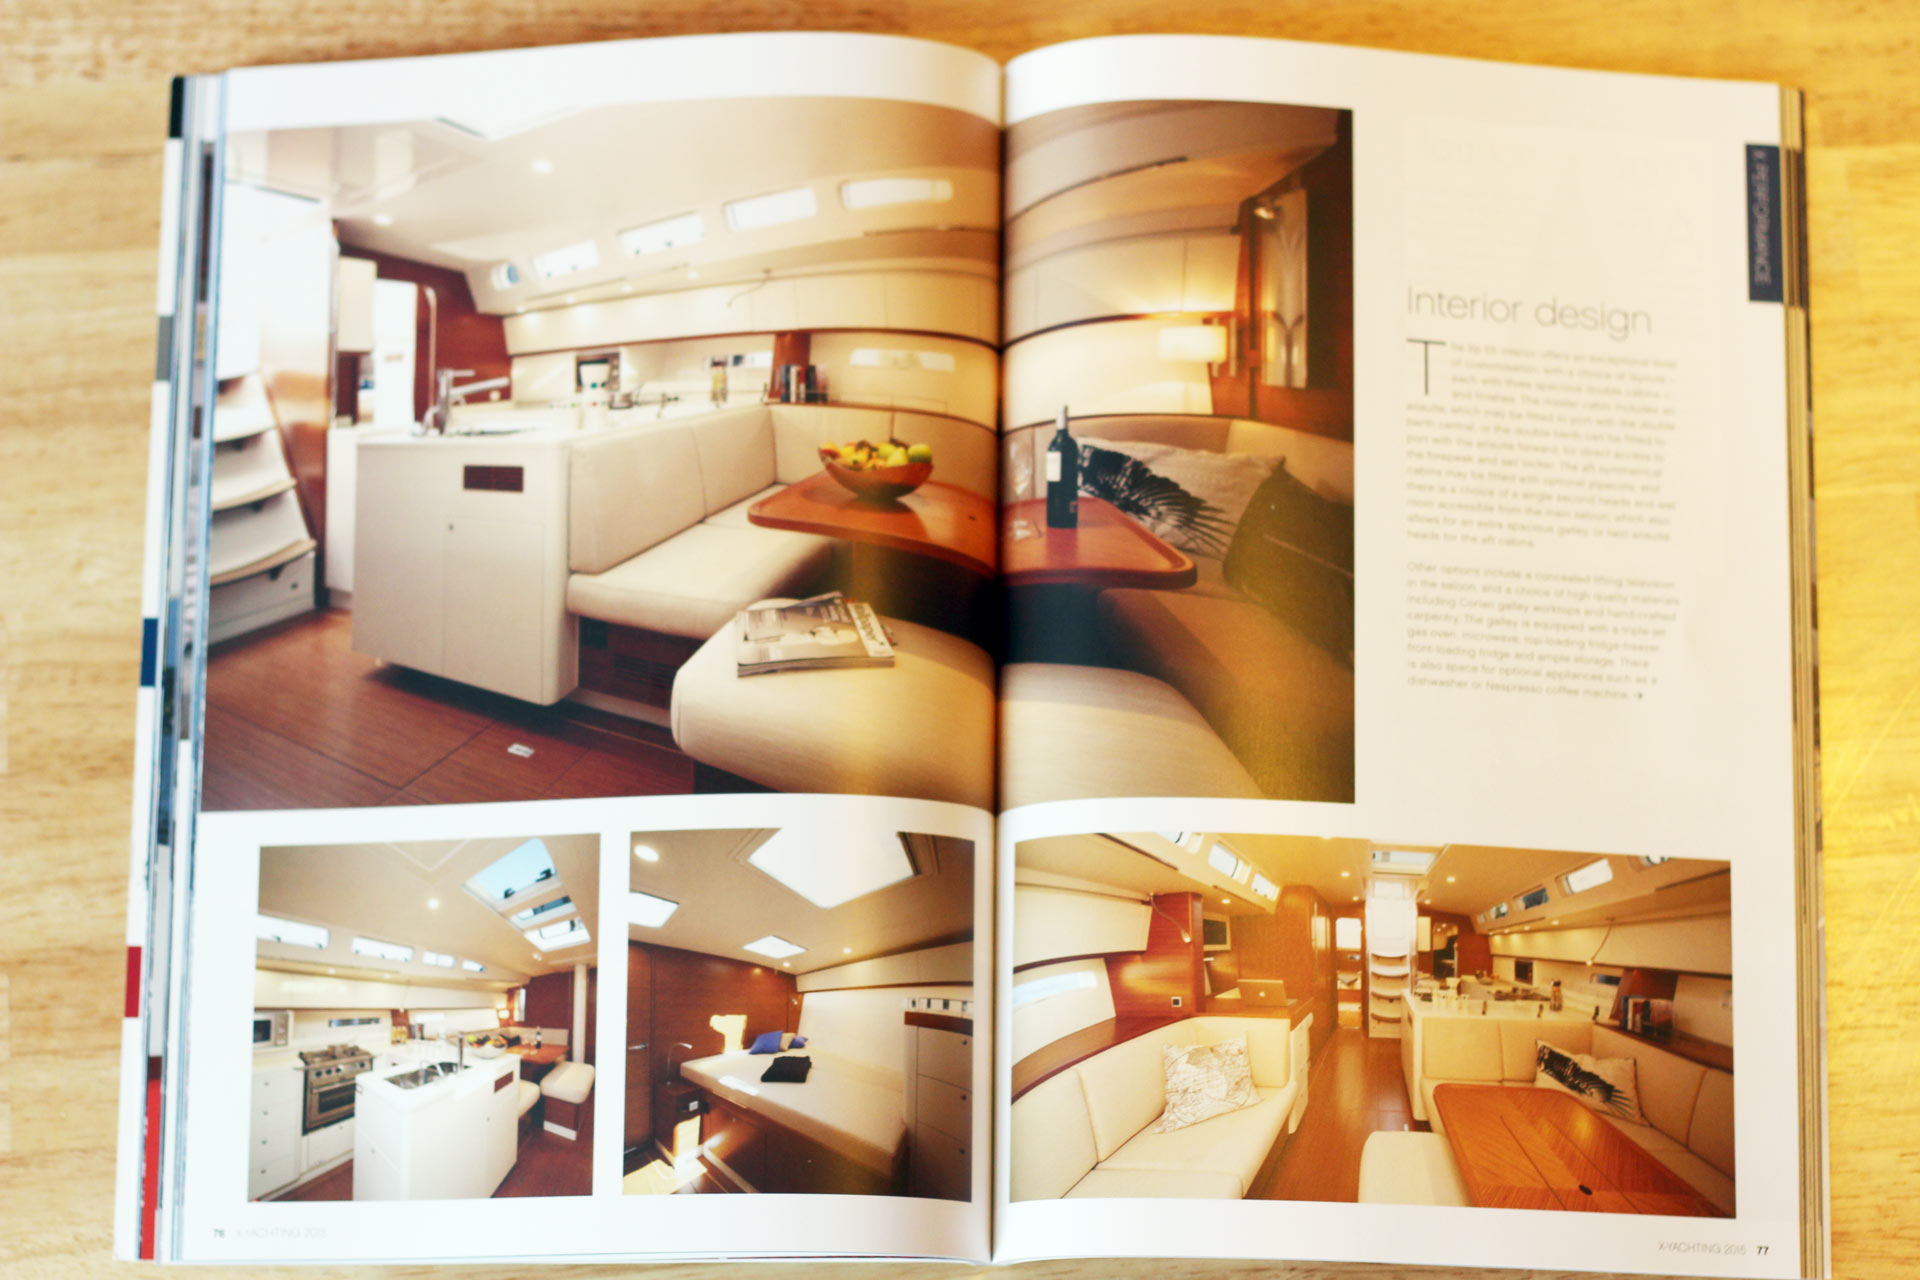 Modern kitchen or yacht? Interior design by X-Yachts of Denmark.